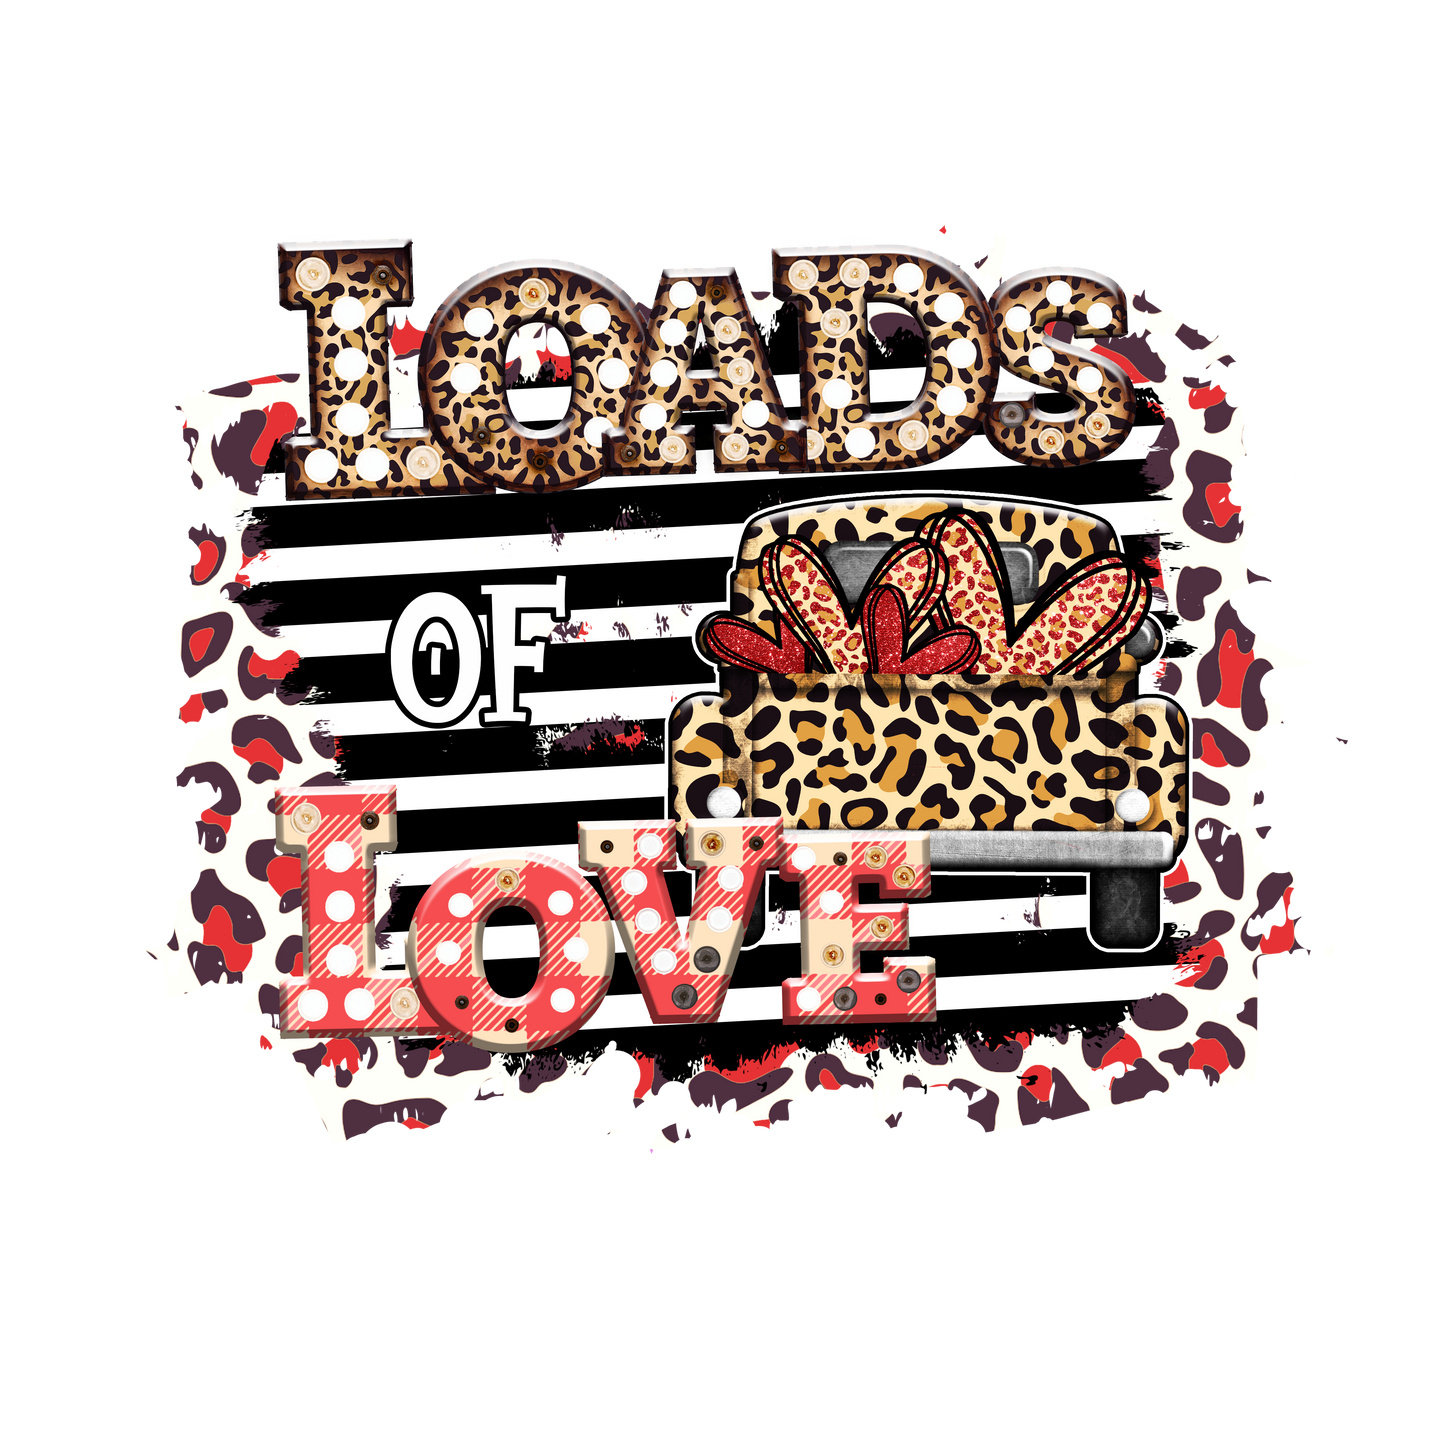 Loads of Love